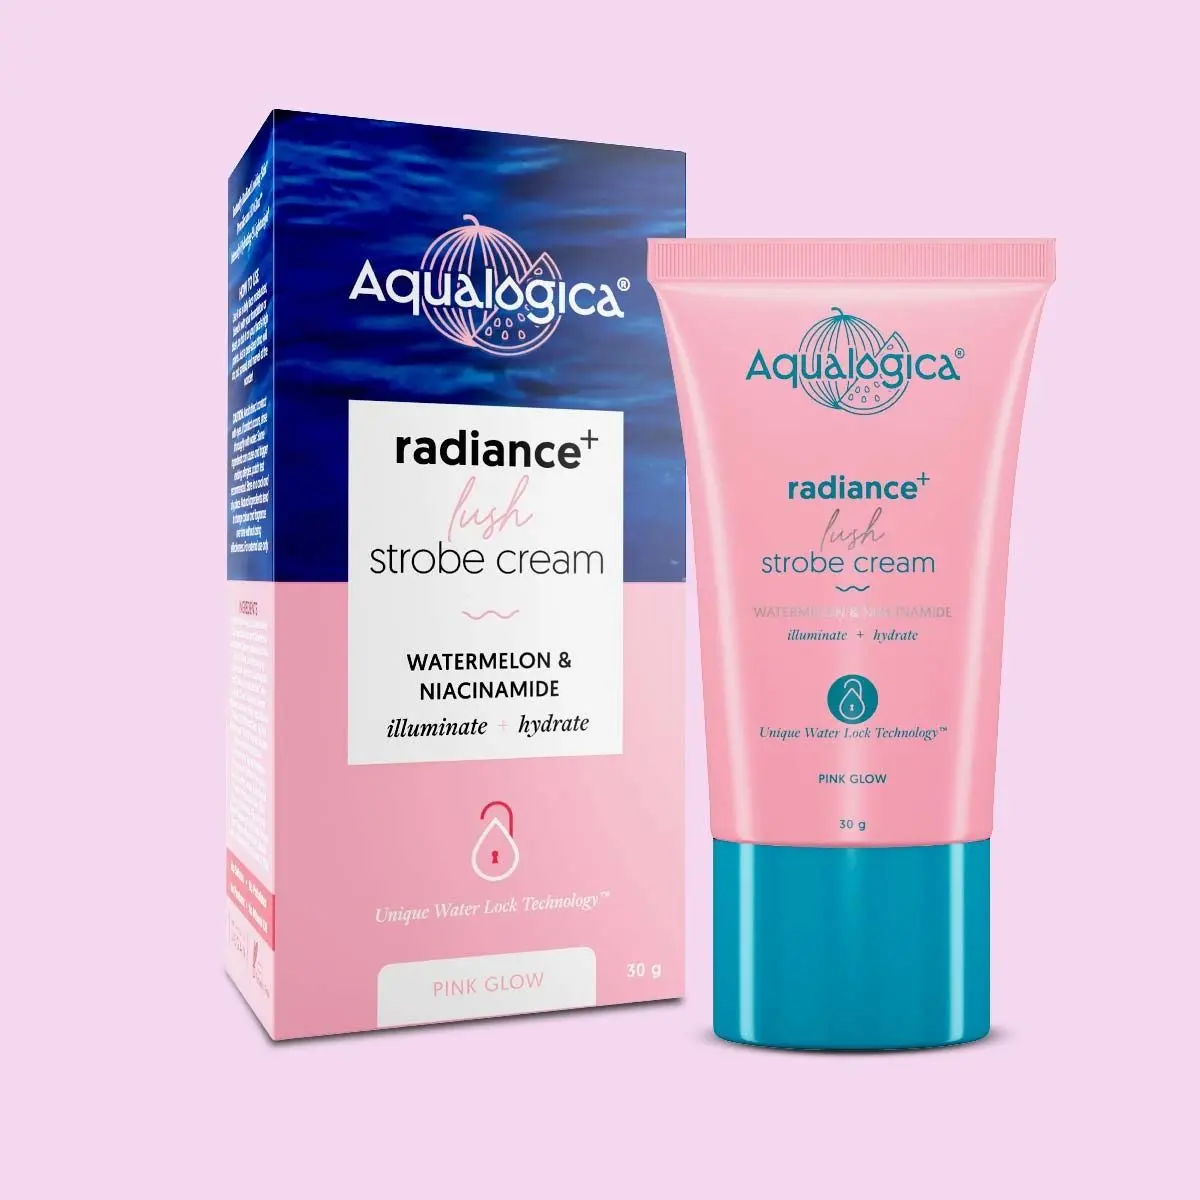 Aqualogica Radiance+ Lush Strobe Cream with Watermelon & Niacinamide - (30 g)